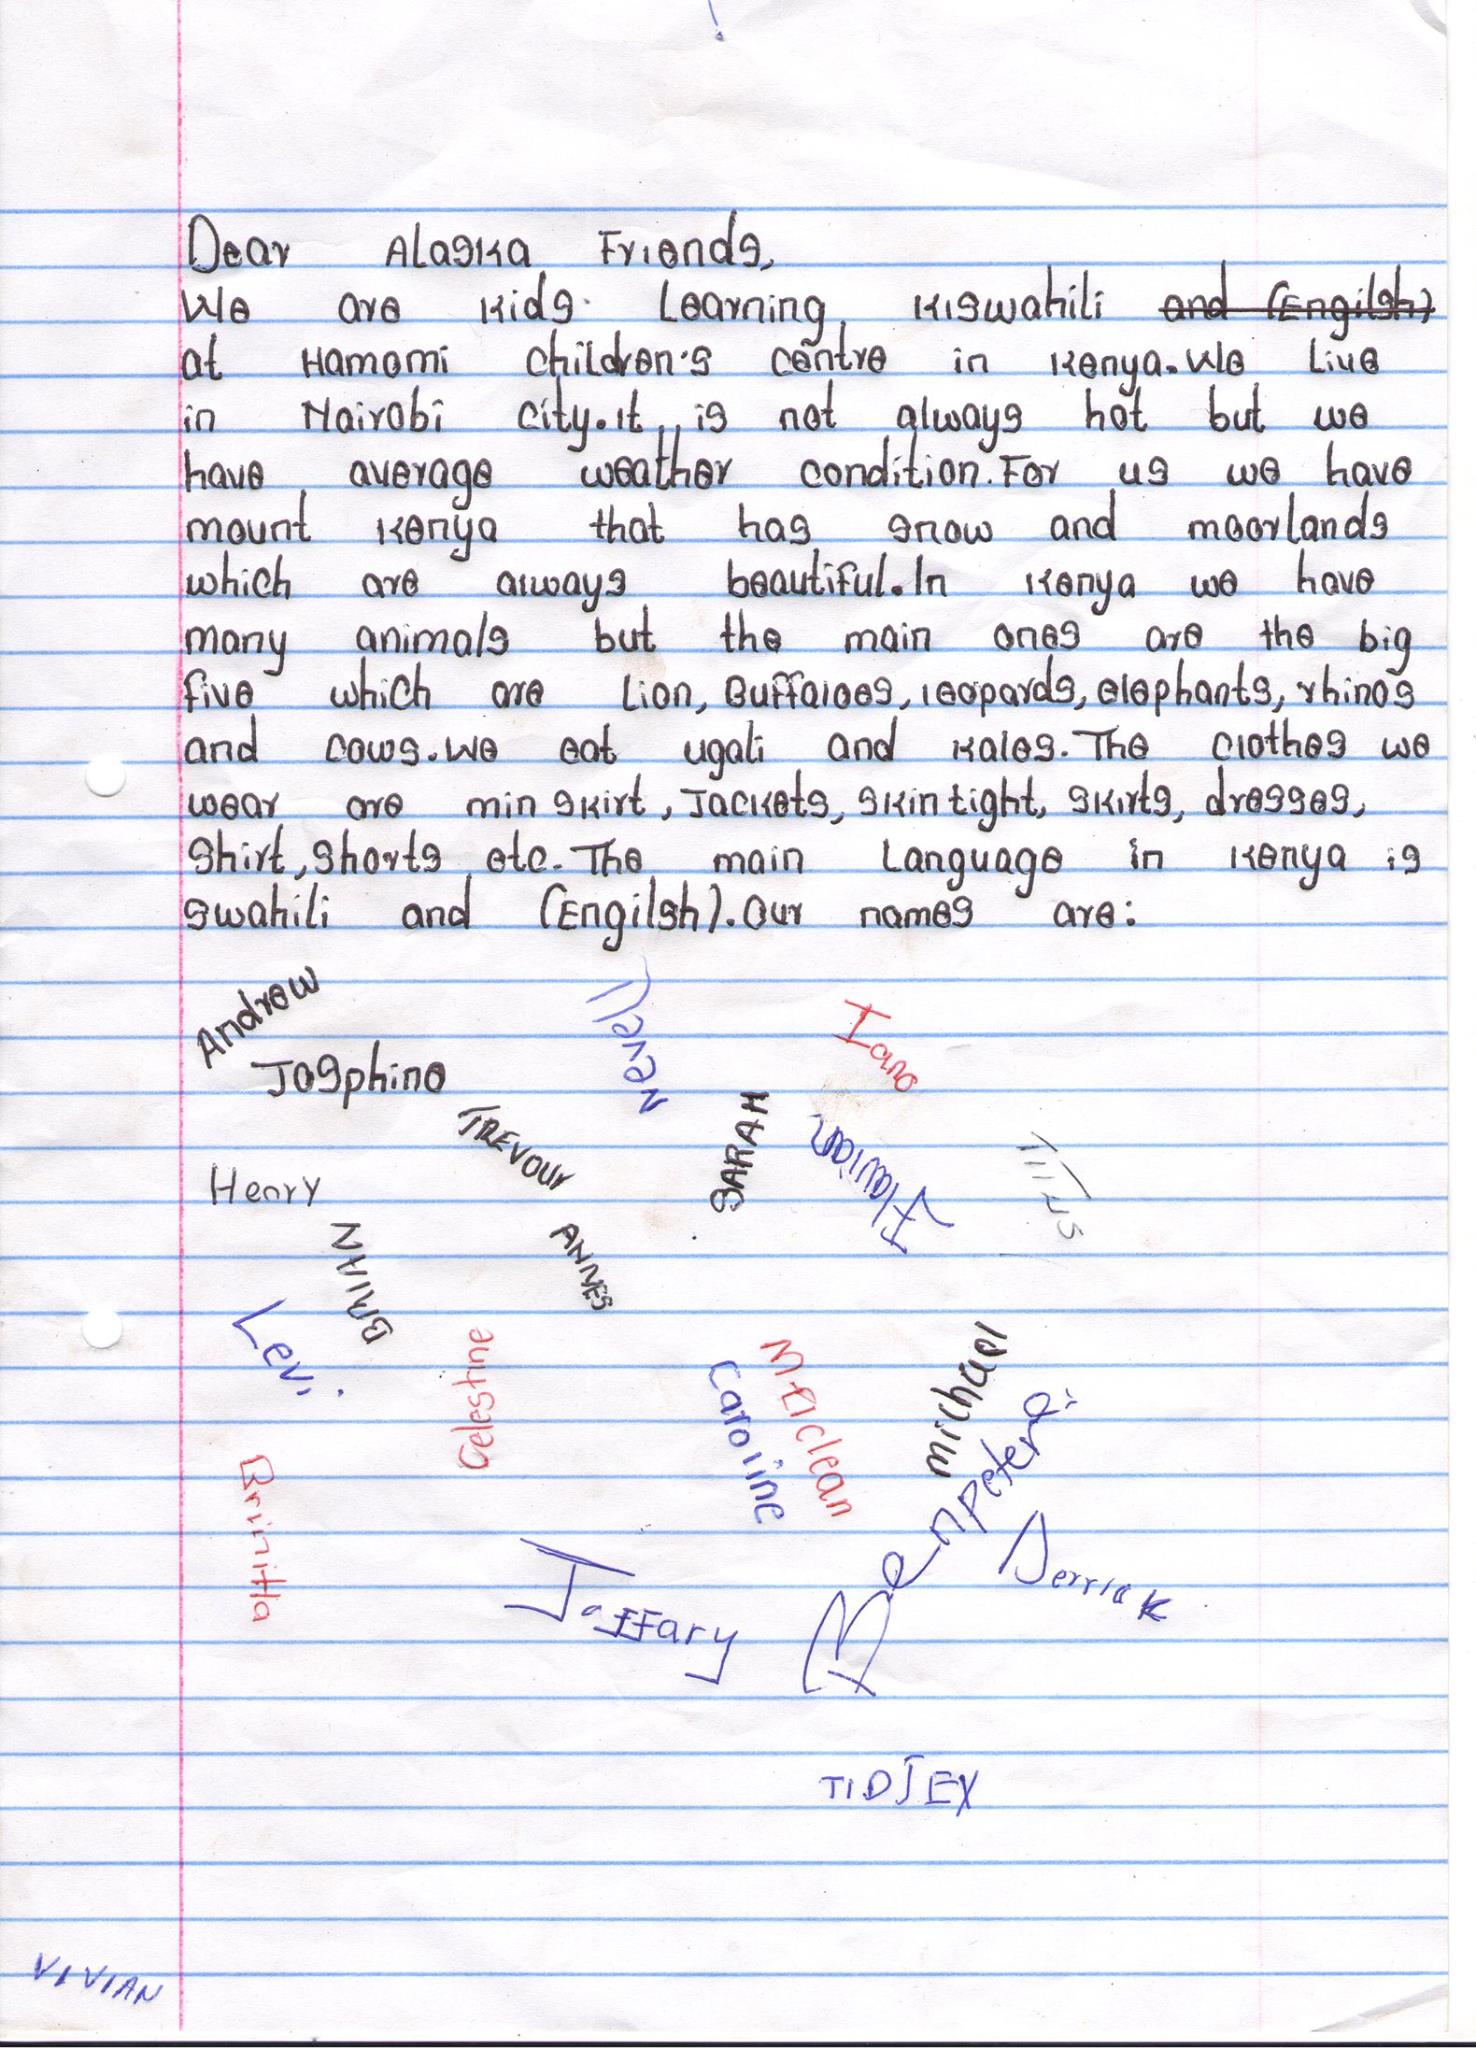 hamomi-students-write-pen-pal-letters-hamomi-children-s-centre